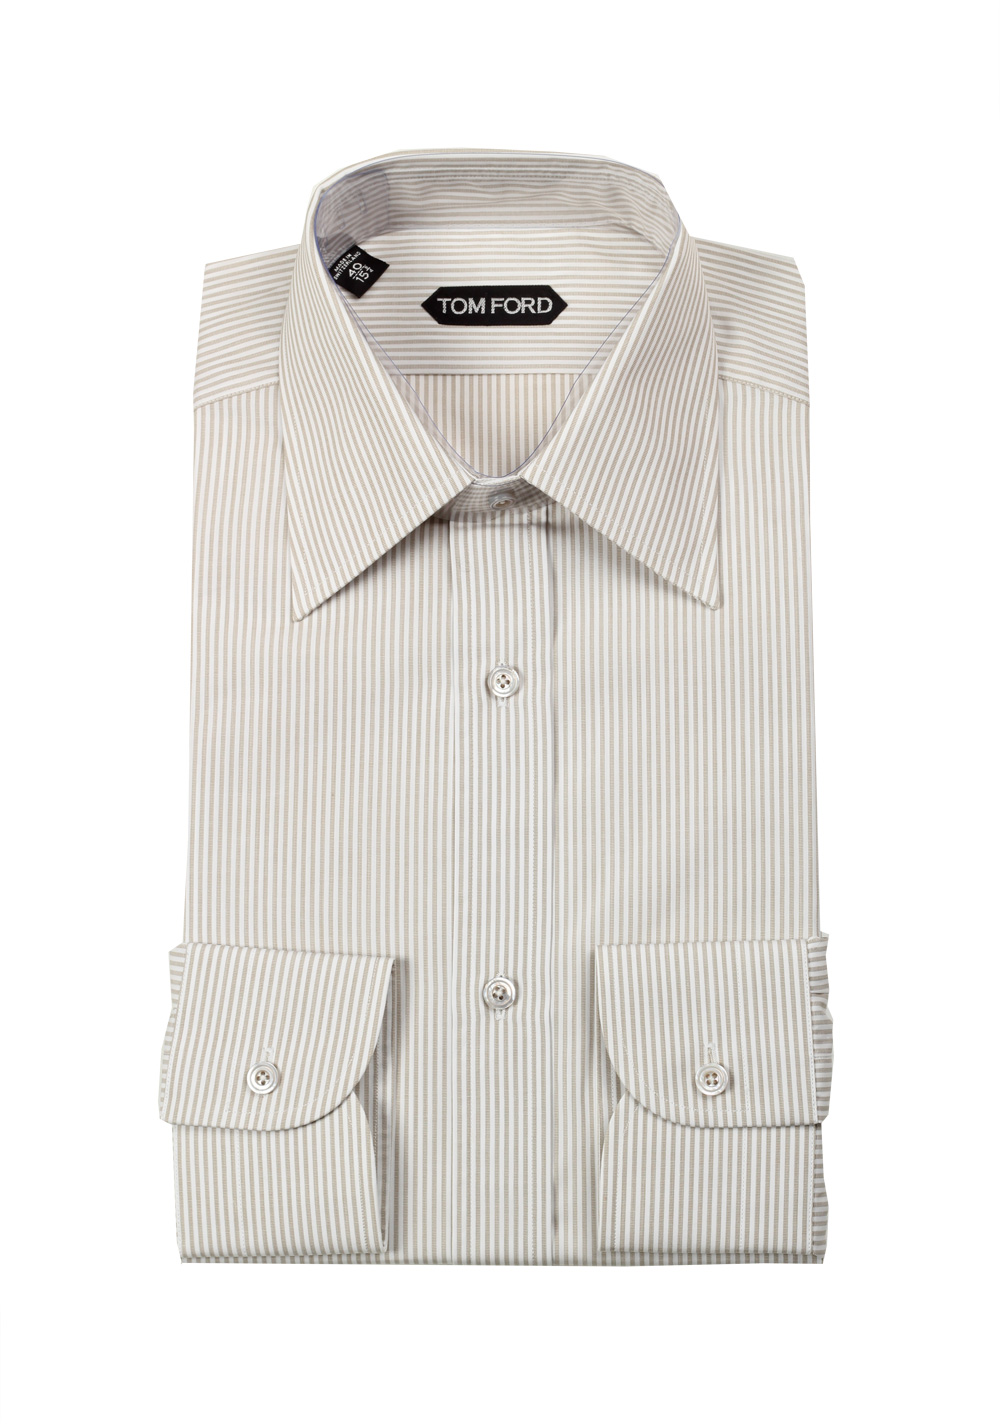 TOM FORD Striped White Gray Dress Shirt Size 40 / 15,75 U.S. | Costume Limité